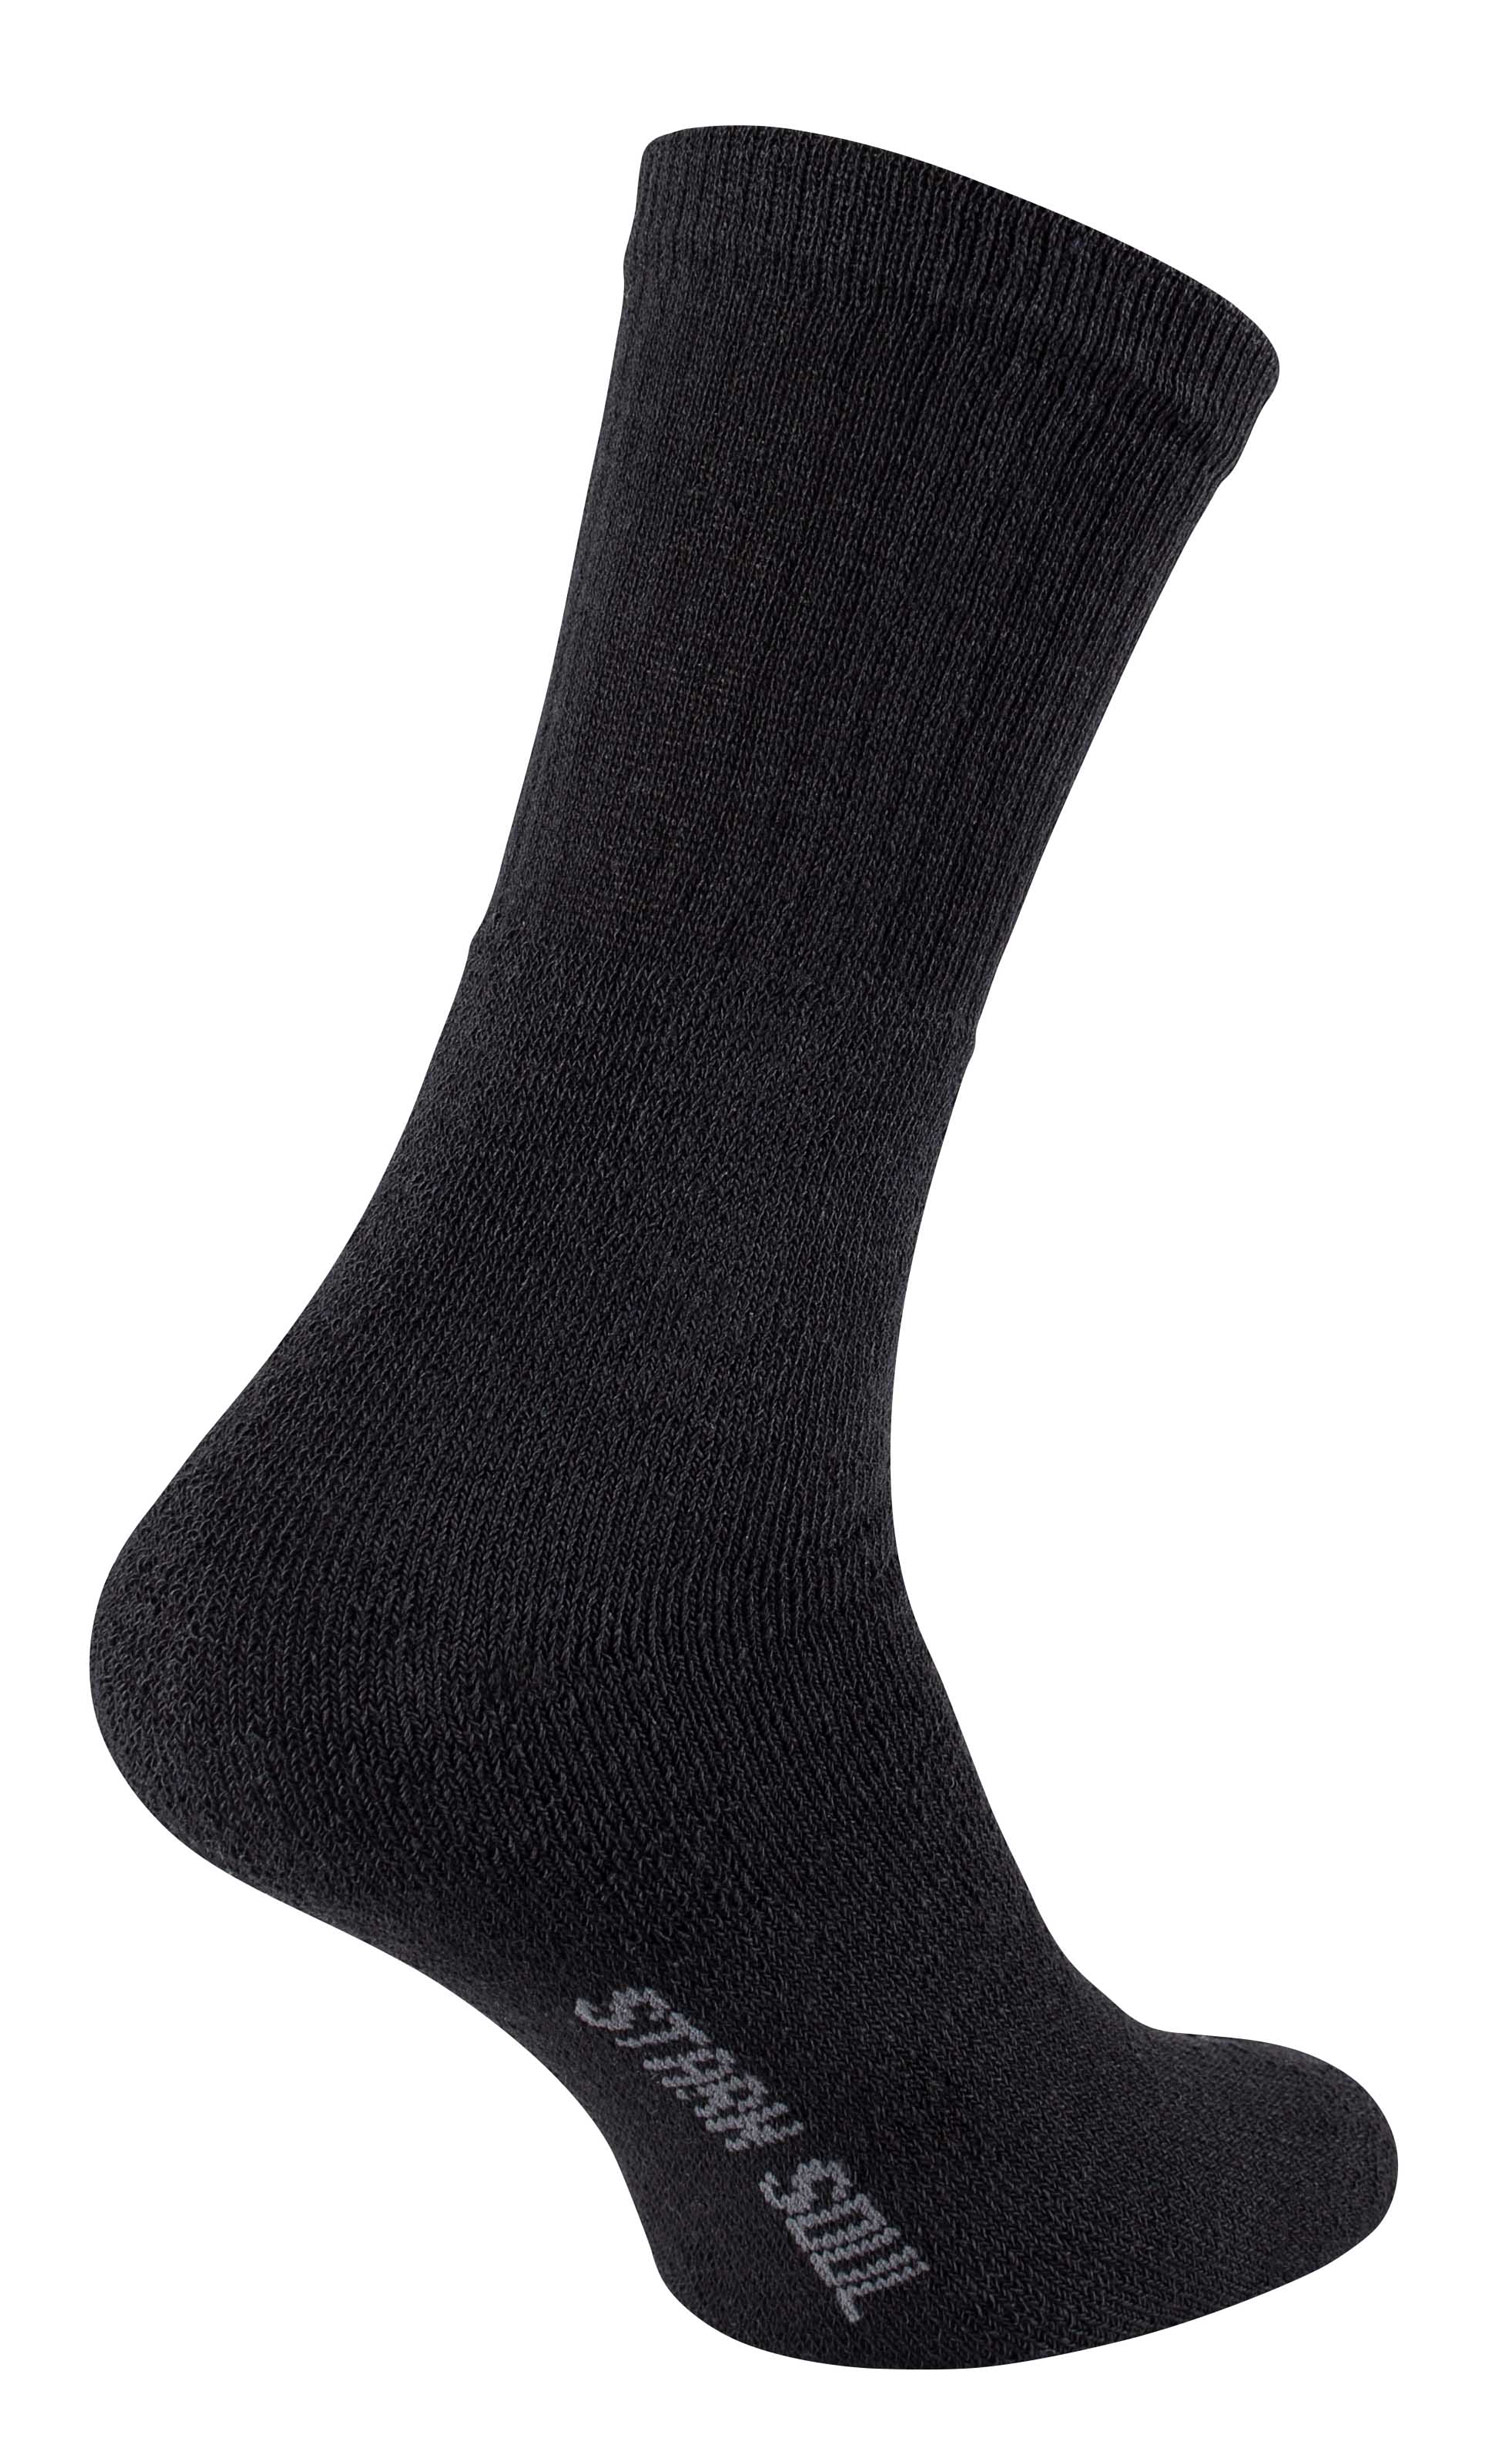 Crew Socken - 6 oder 12 Paar Tennissocken in schwarz | Sockswear | Herren